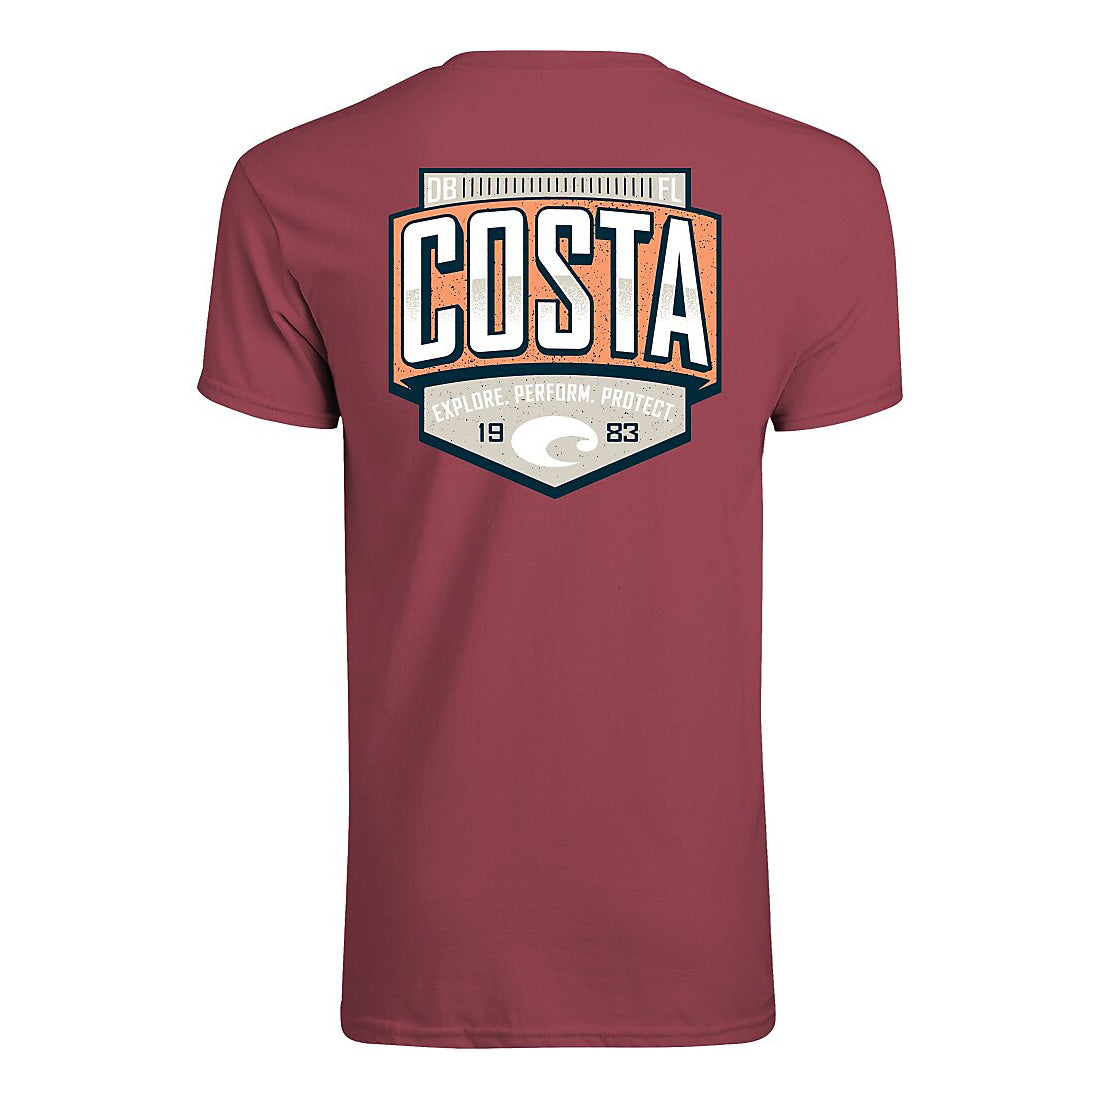 Costa Harbor Crew Short Sleeve T-Shirt